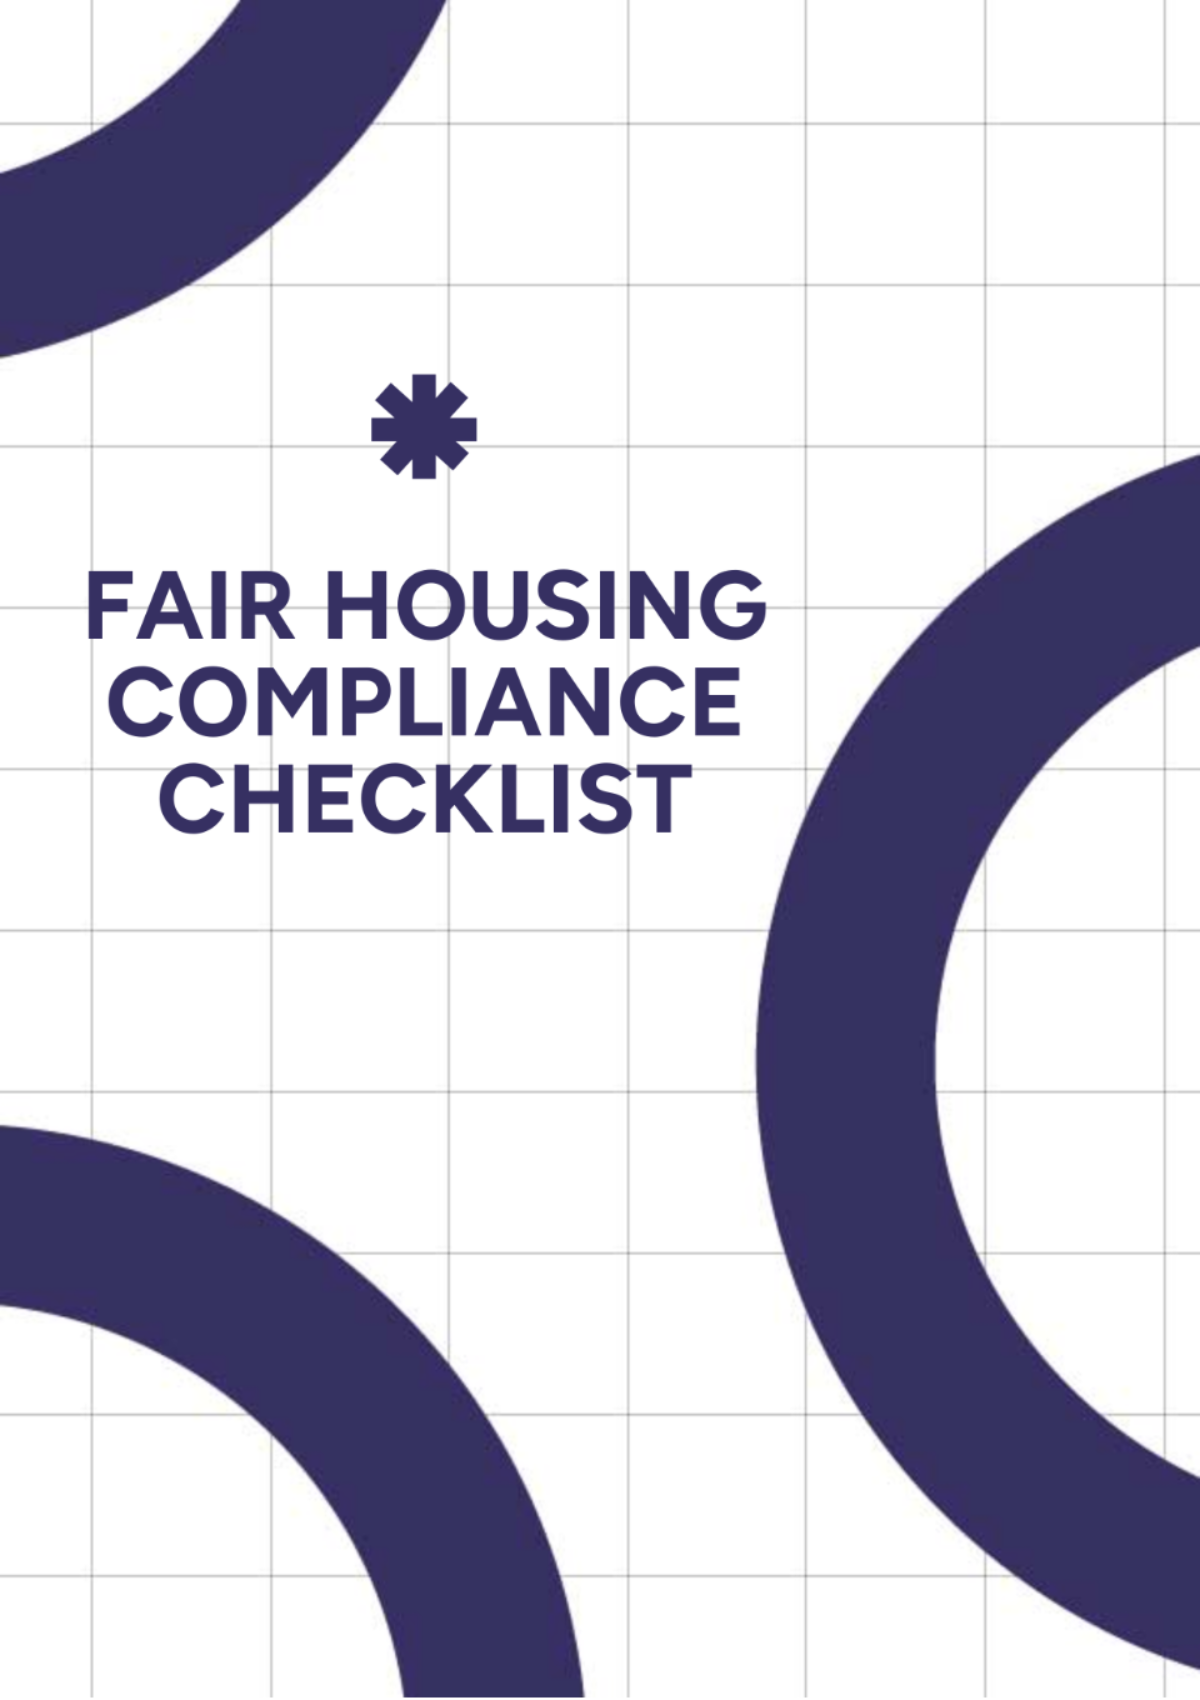 Fair Housing Compliance Checklist Template